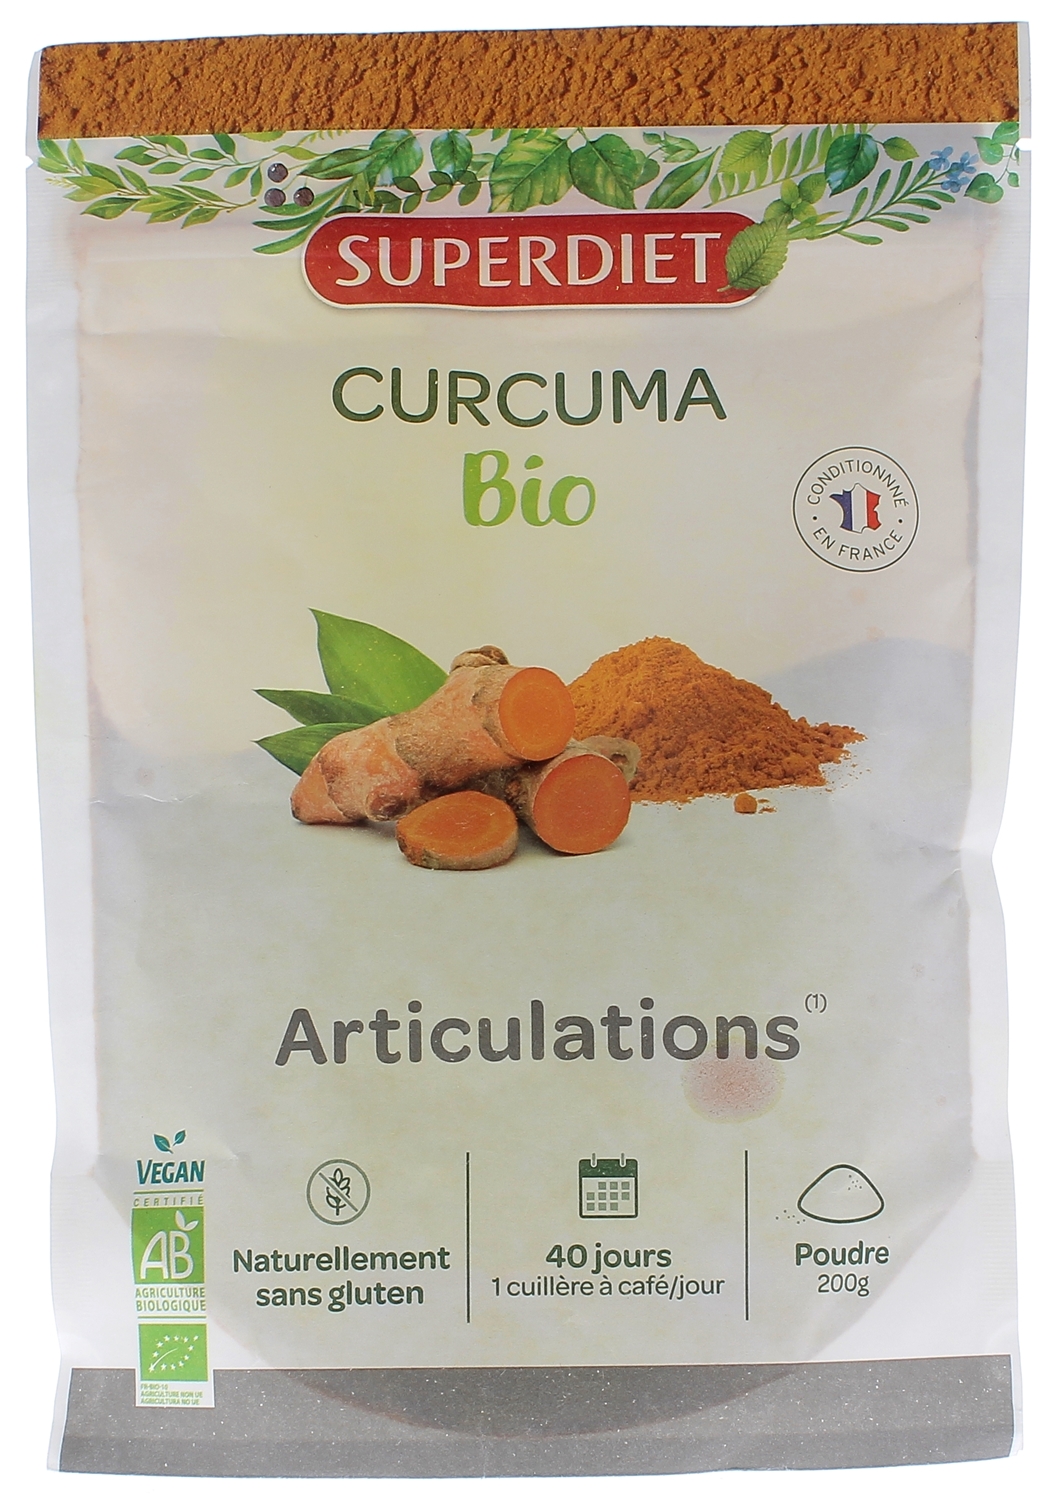 Curcuma bio Superdiet - complément alimentaire articulations